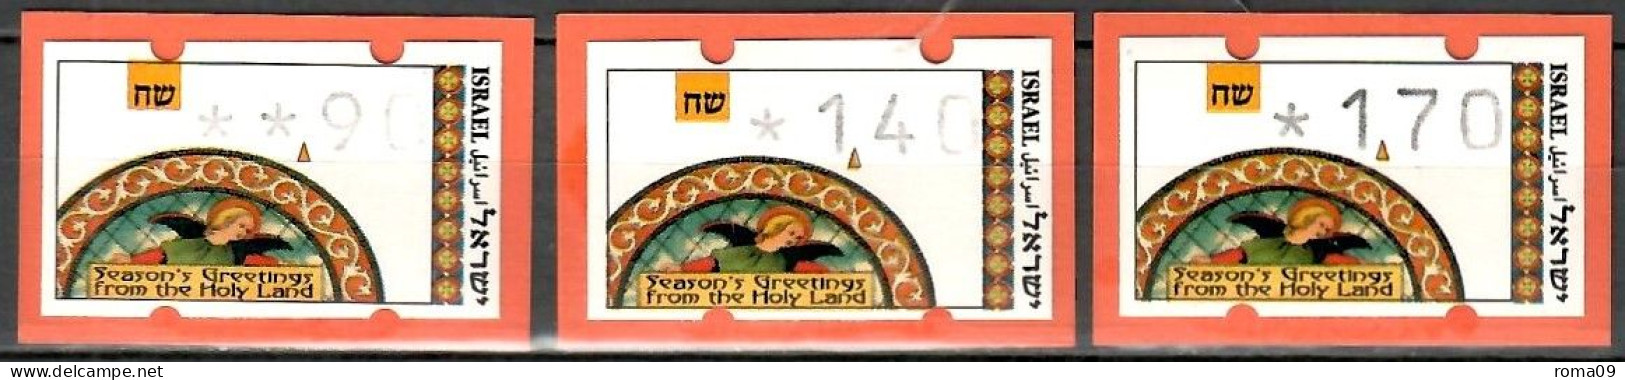 Israel, ATM (Klüssendorf); MiNr. 3; 0,90/1,40/1,70; Postfrisch, Automaten Nr. 023; A-2696 - Vignettes D'affranchissement (Frama)